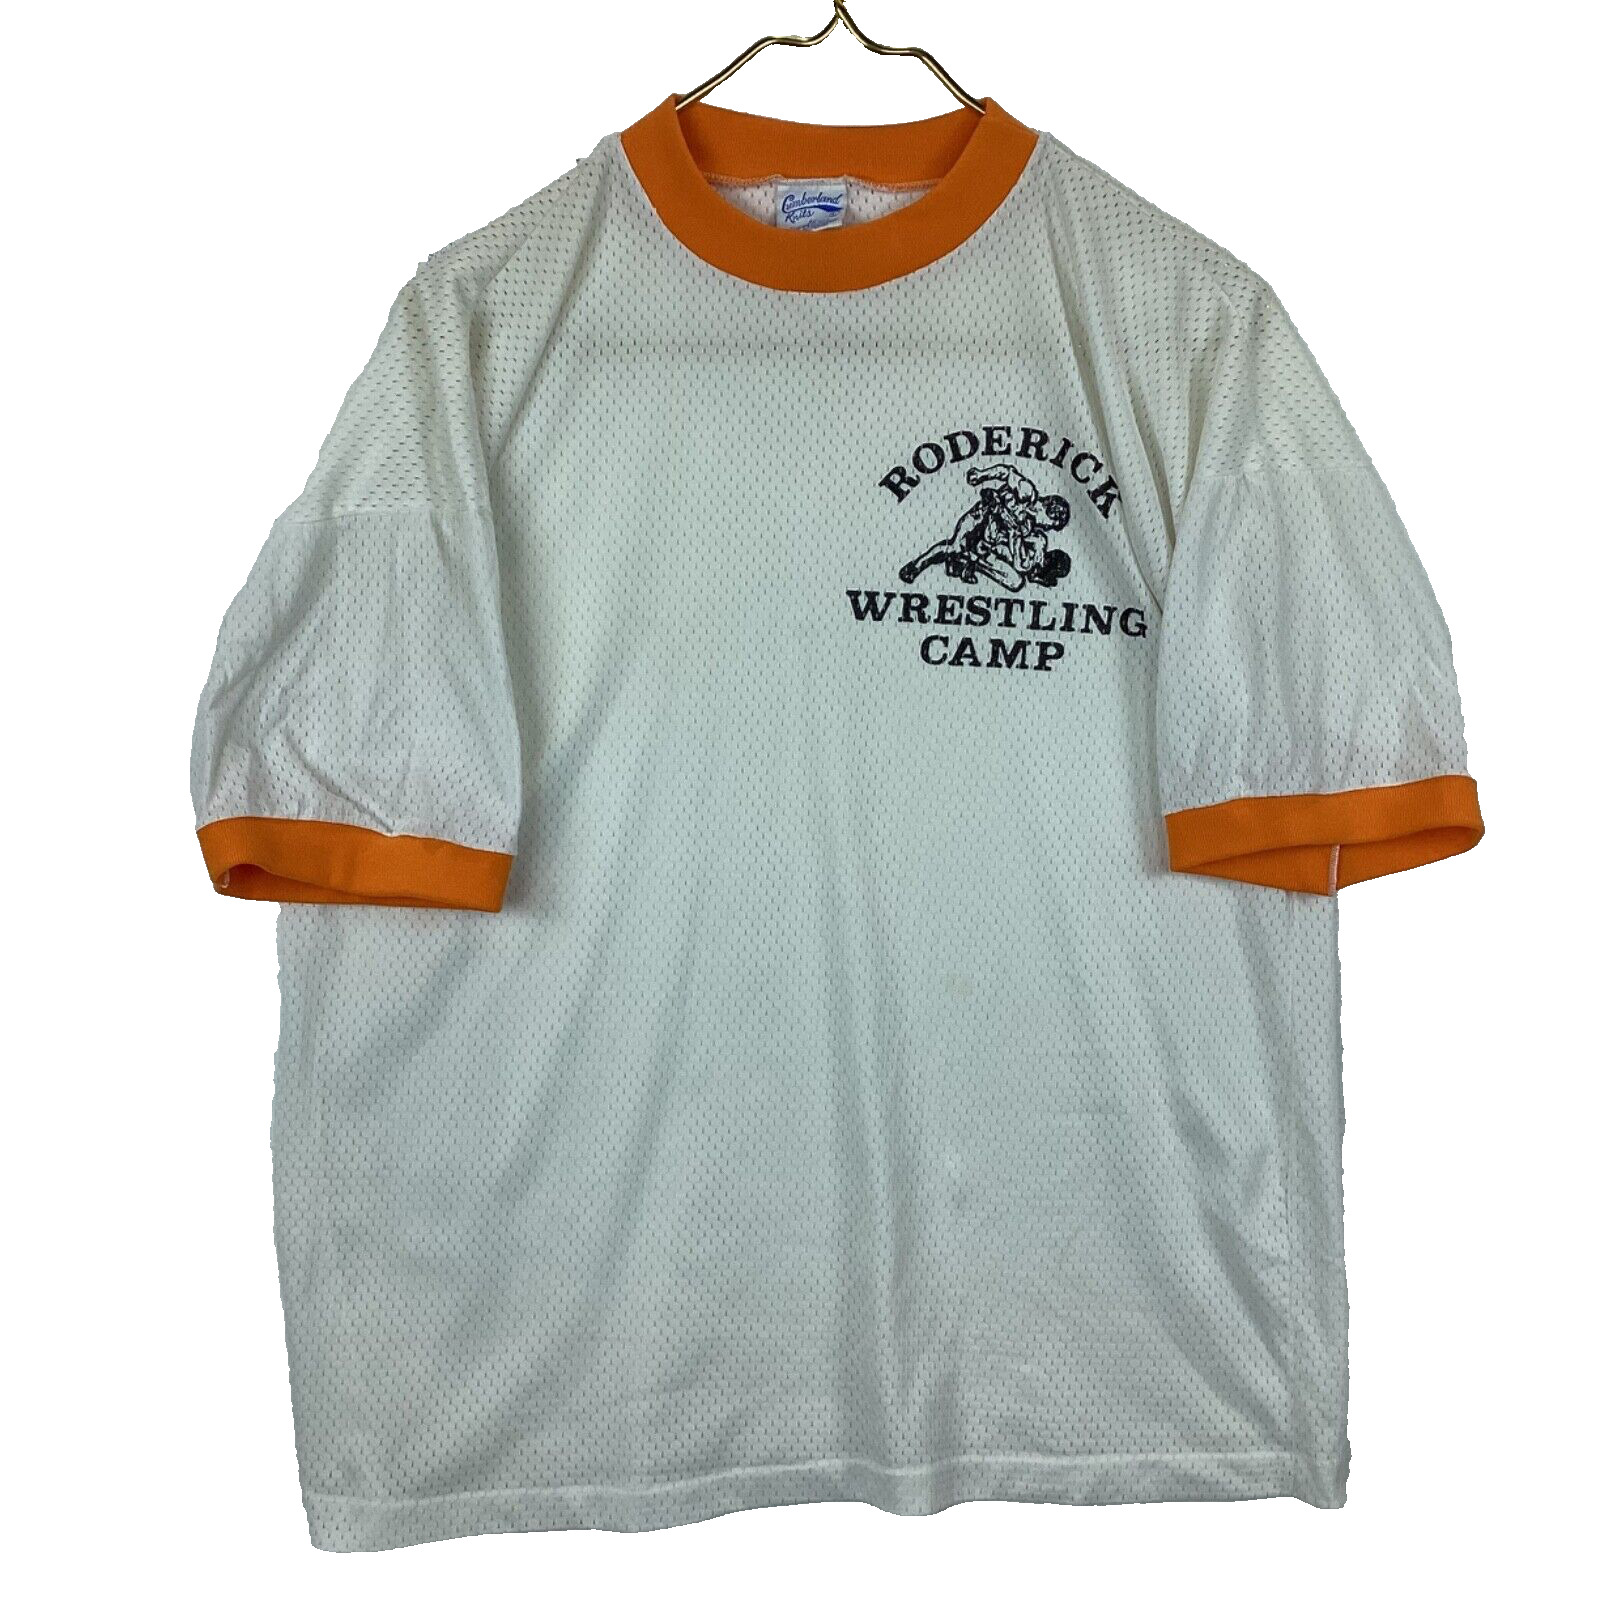 Vintage 1970s Mesh Ringer Cumberland T-Shirt Large Made Usa Wrestling